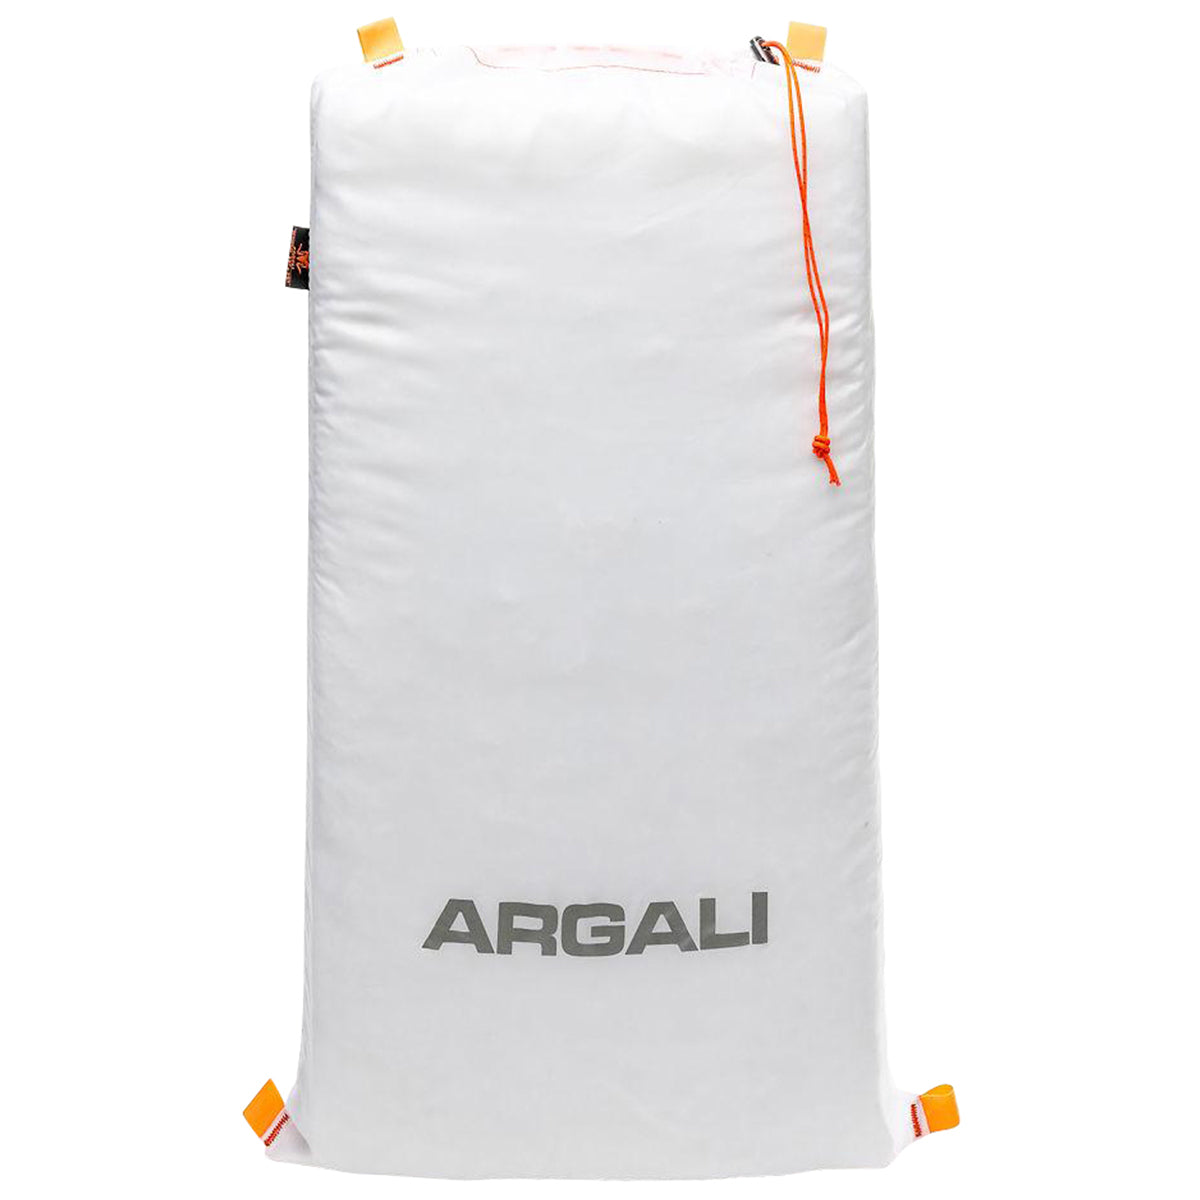 Argali High Country Pack Ultralight Game Bag Set in Argali High Country Pack Ultralight Game Bag Set by Argali | Gear - goHUNT Shop by GOHUNT | Argali - GOHUNT Shop